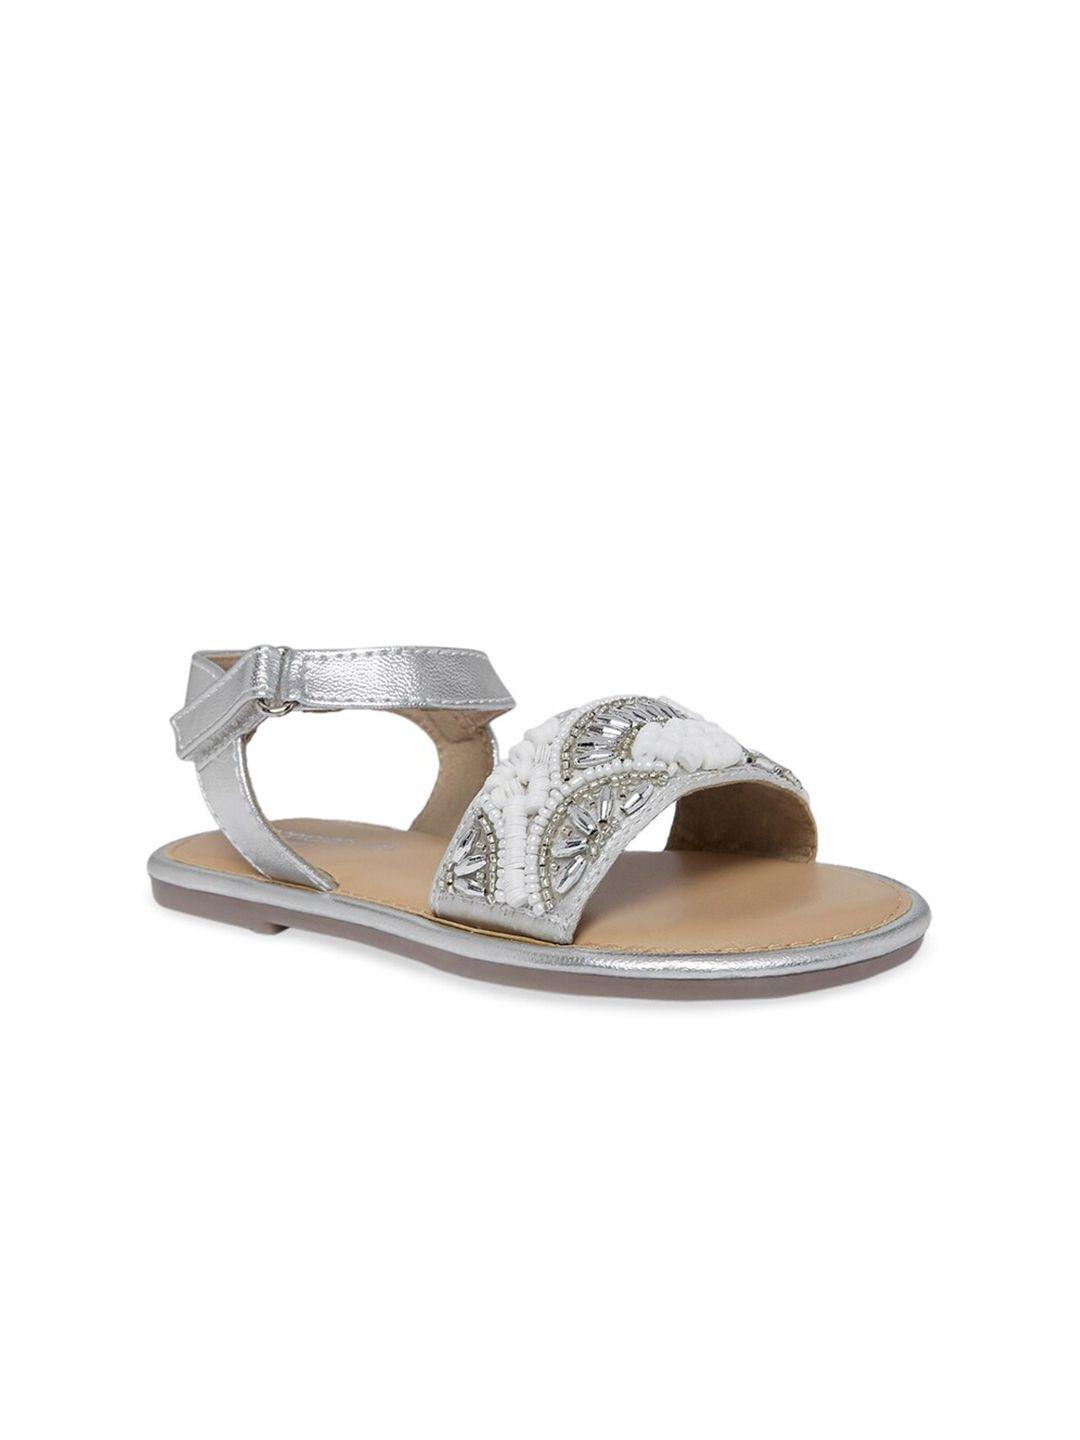 pantaloons junior girls white & silver-toned embellished open toe flats